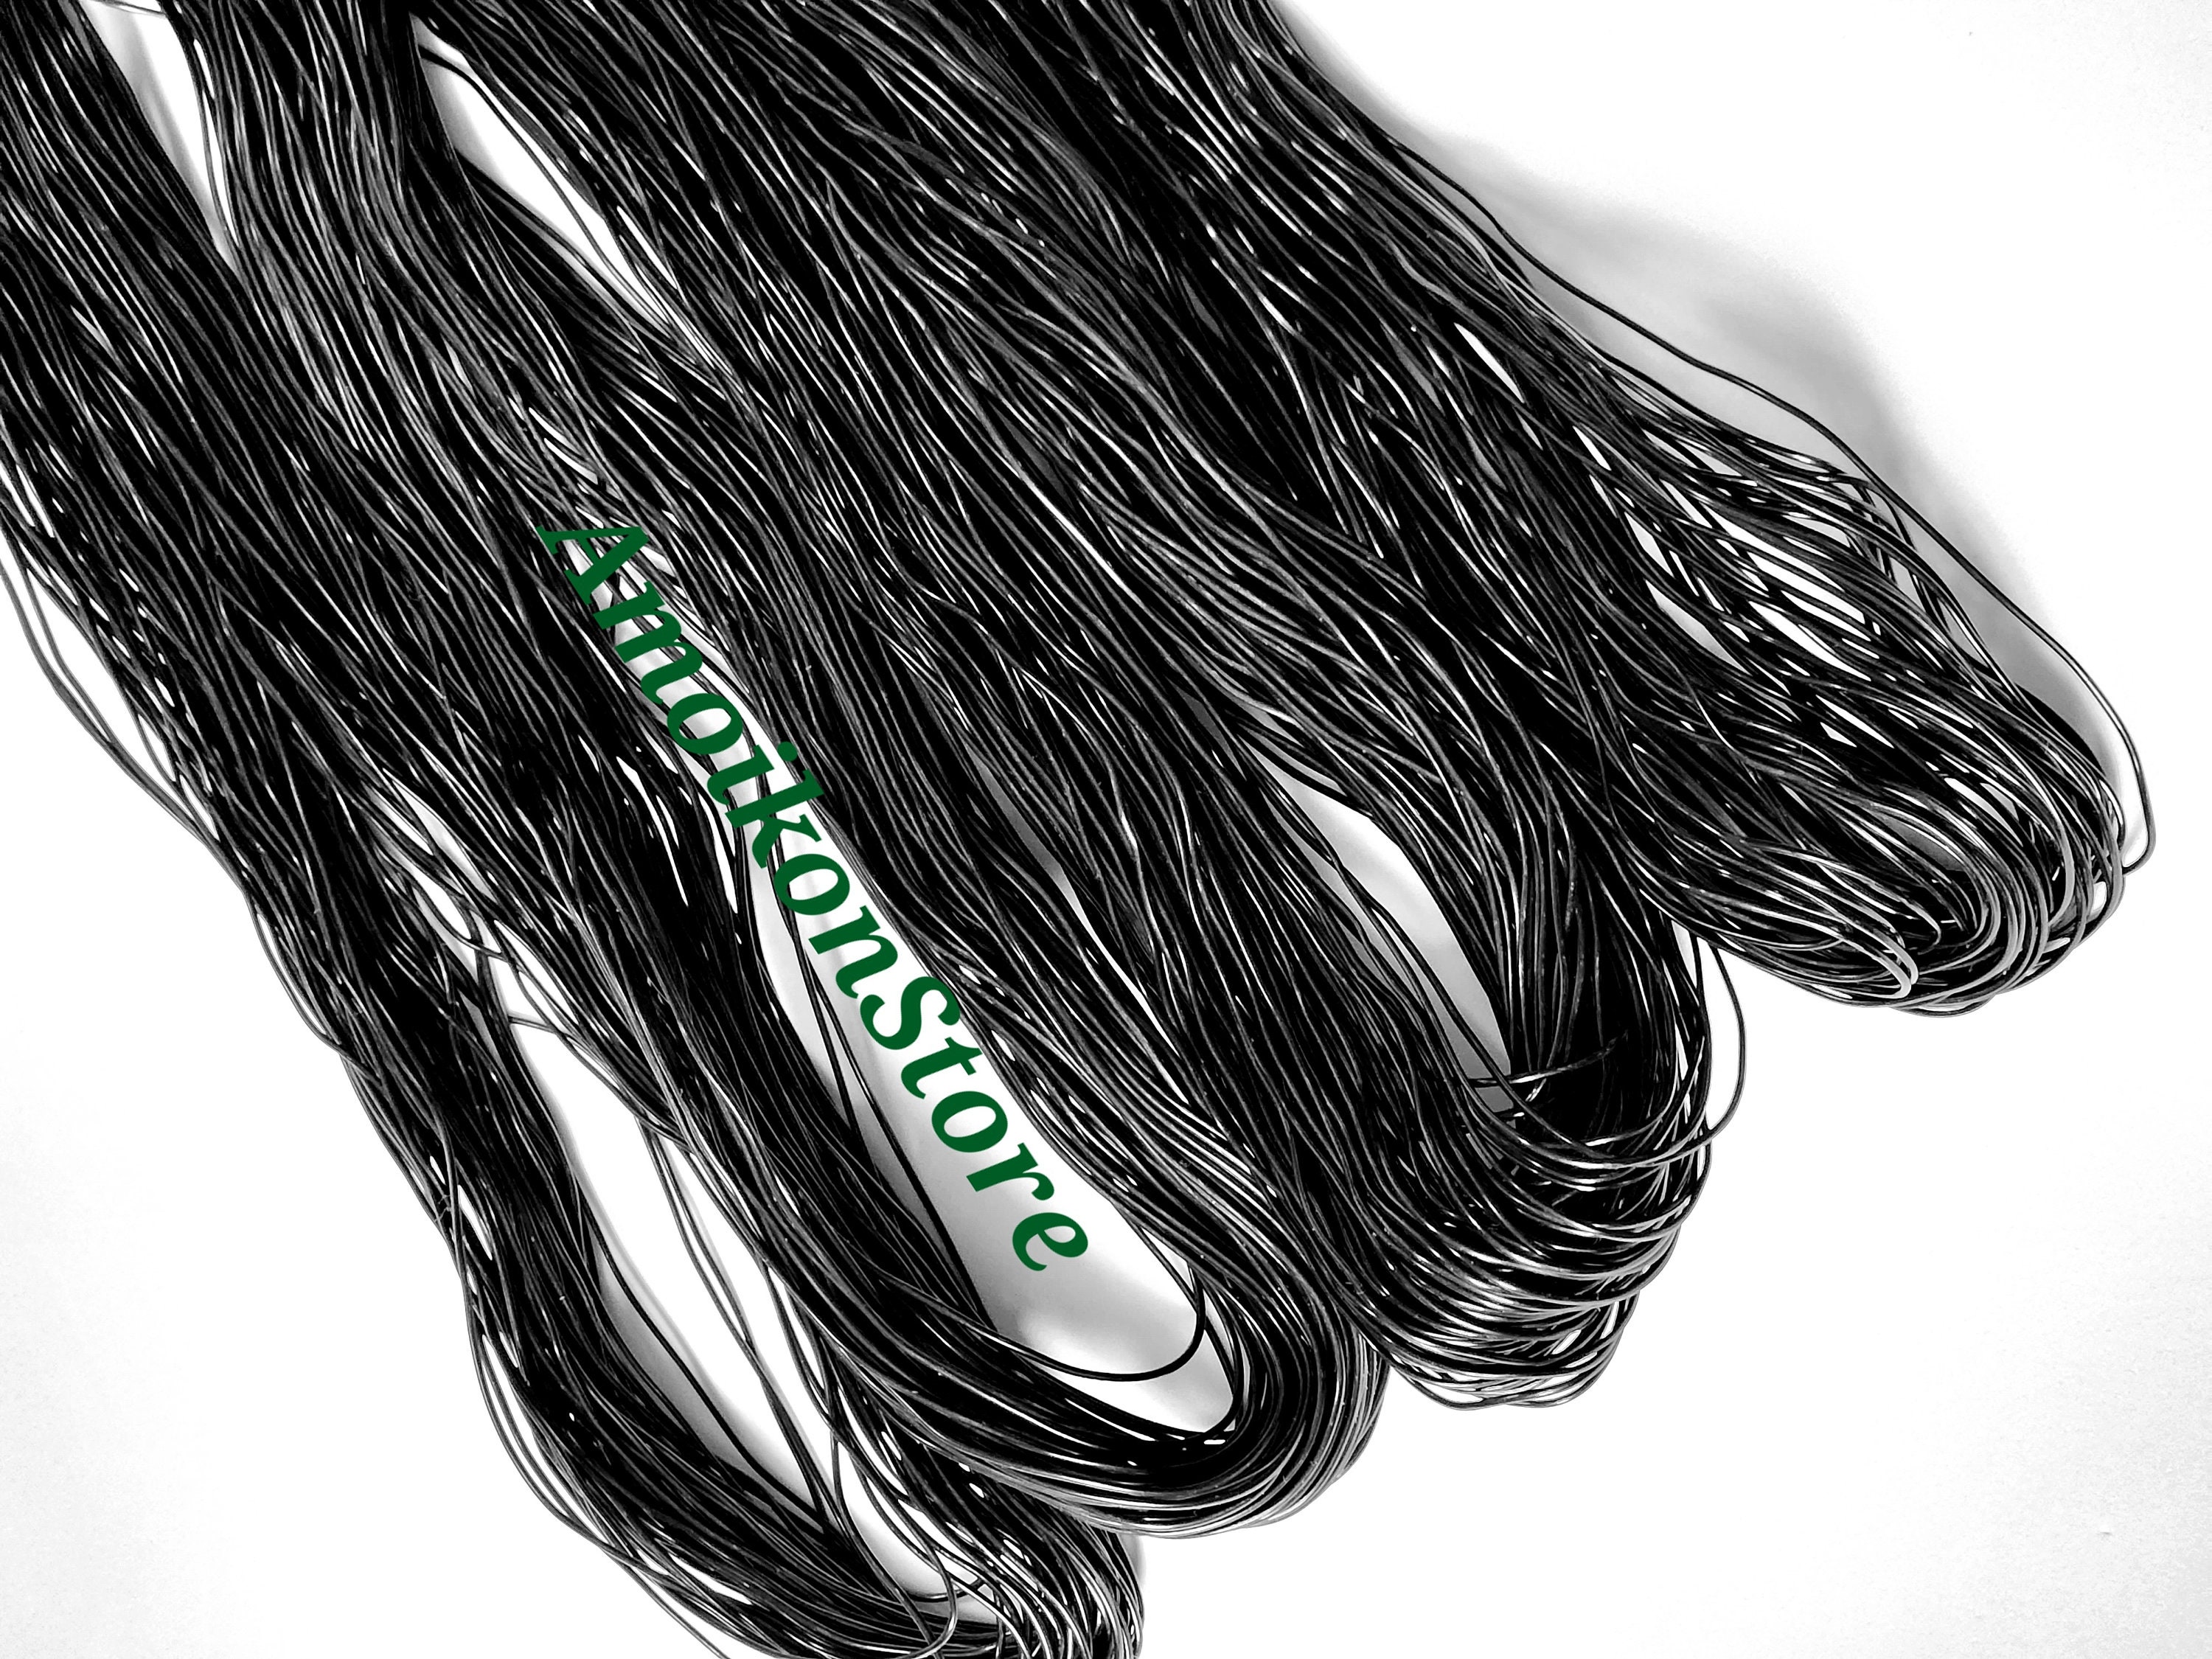 4 Pieces of African Rubber Hair Thread, Black Anango yarn, Fil Anango